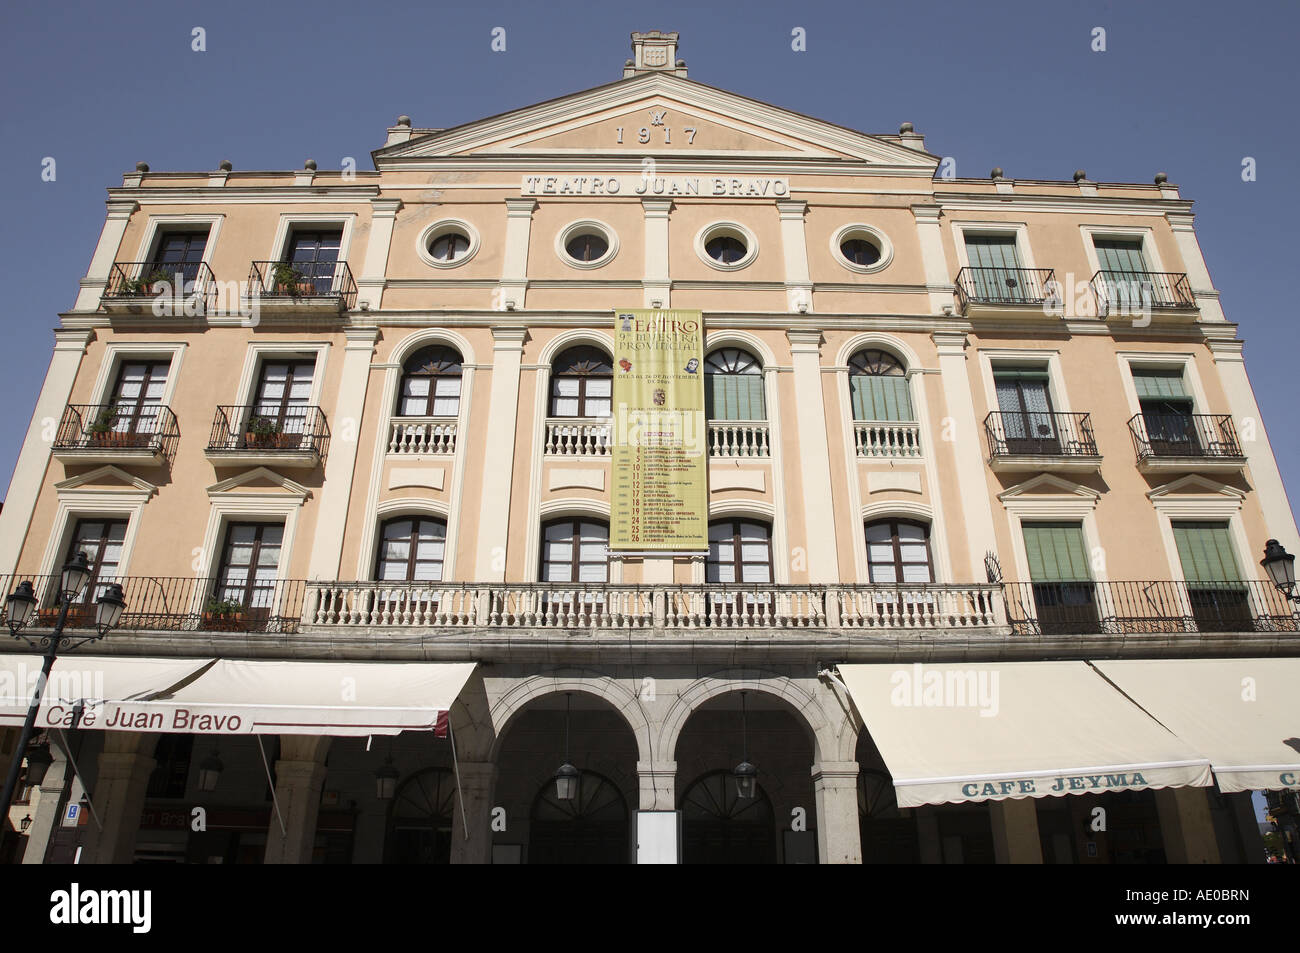 Juan Bravo Theatre in the Plaza Mayor Square, Segovia, Castile and Leon, Spain Stock Photo